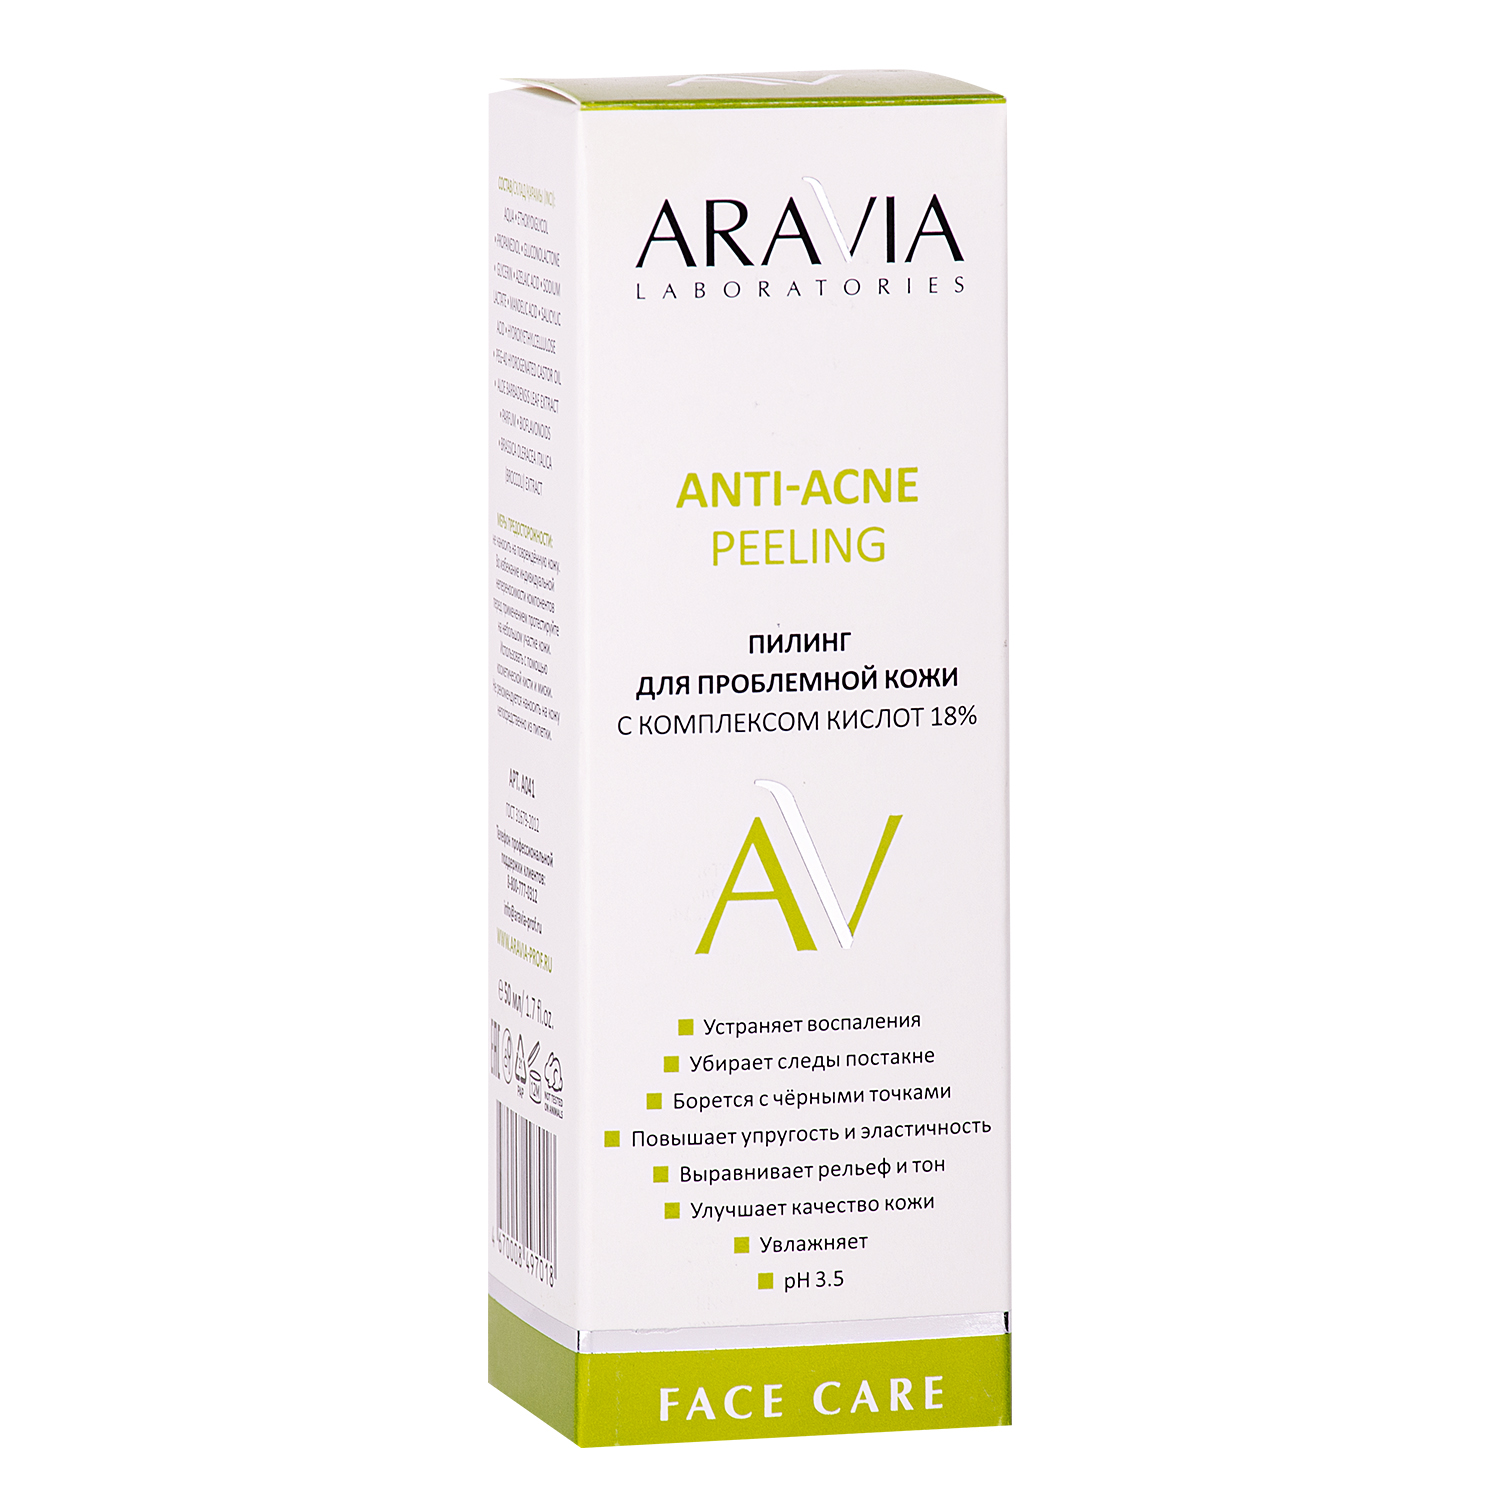 Пилинг для проблемной кожи с комплексом кислот 18% Anti-Acne Peeling, 50 мл, ARAVIA Laboratories